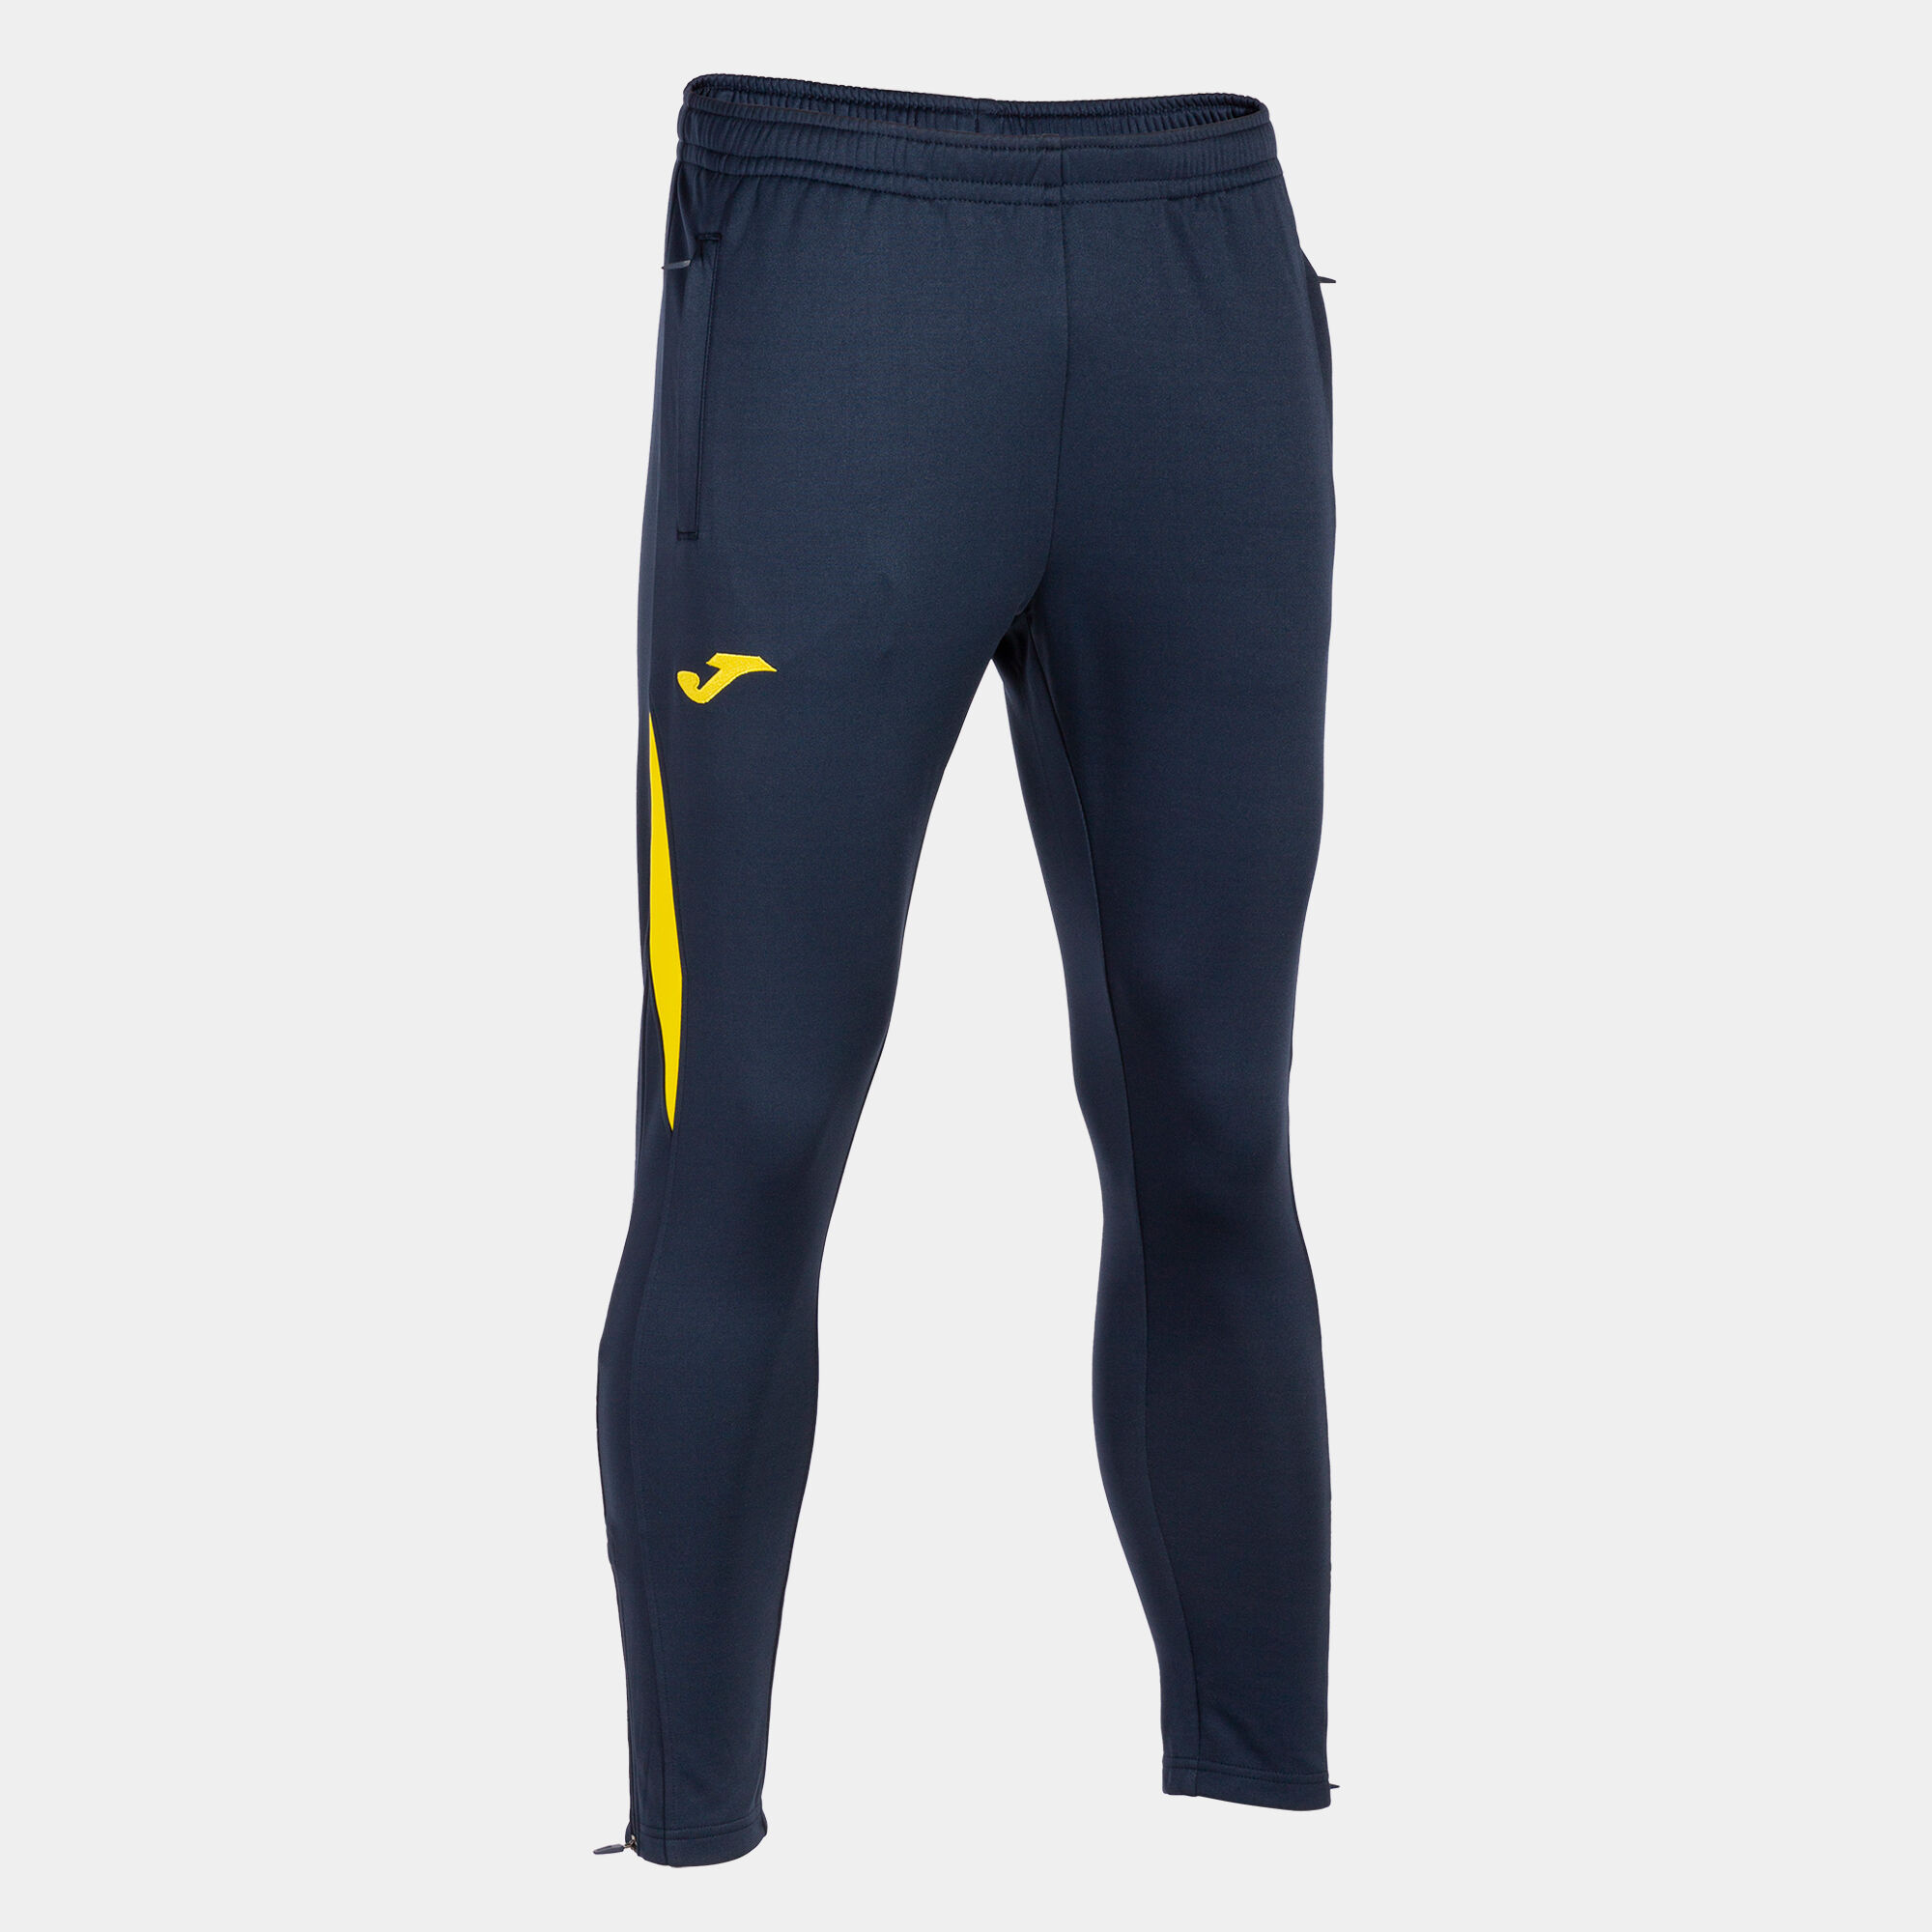 Longs pants man Championship VII navy blue yellow